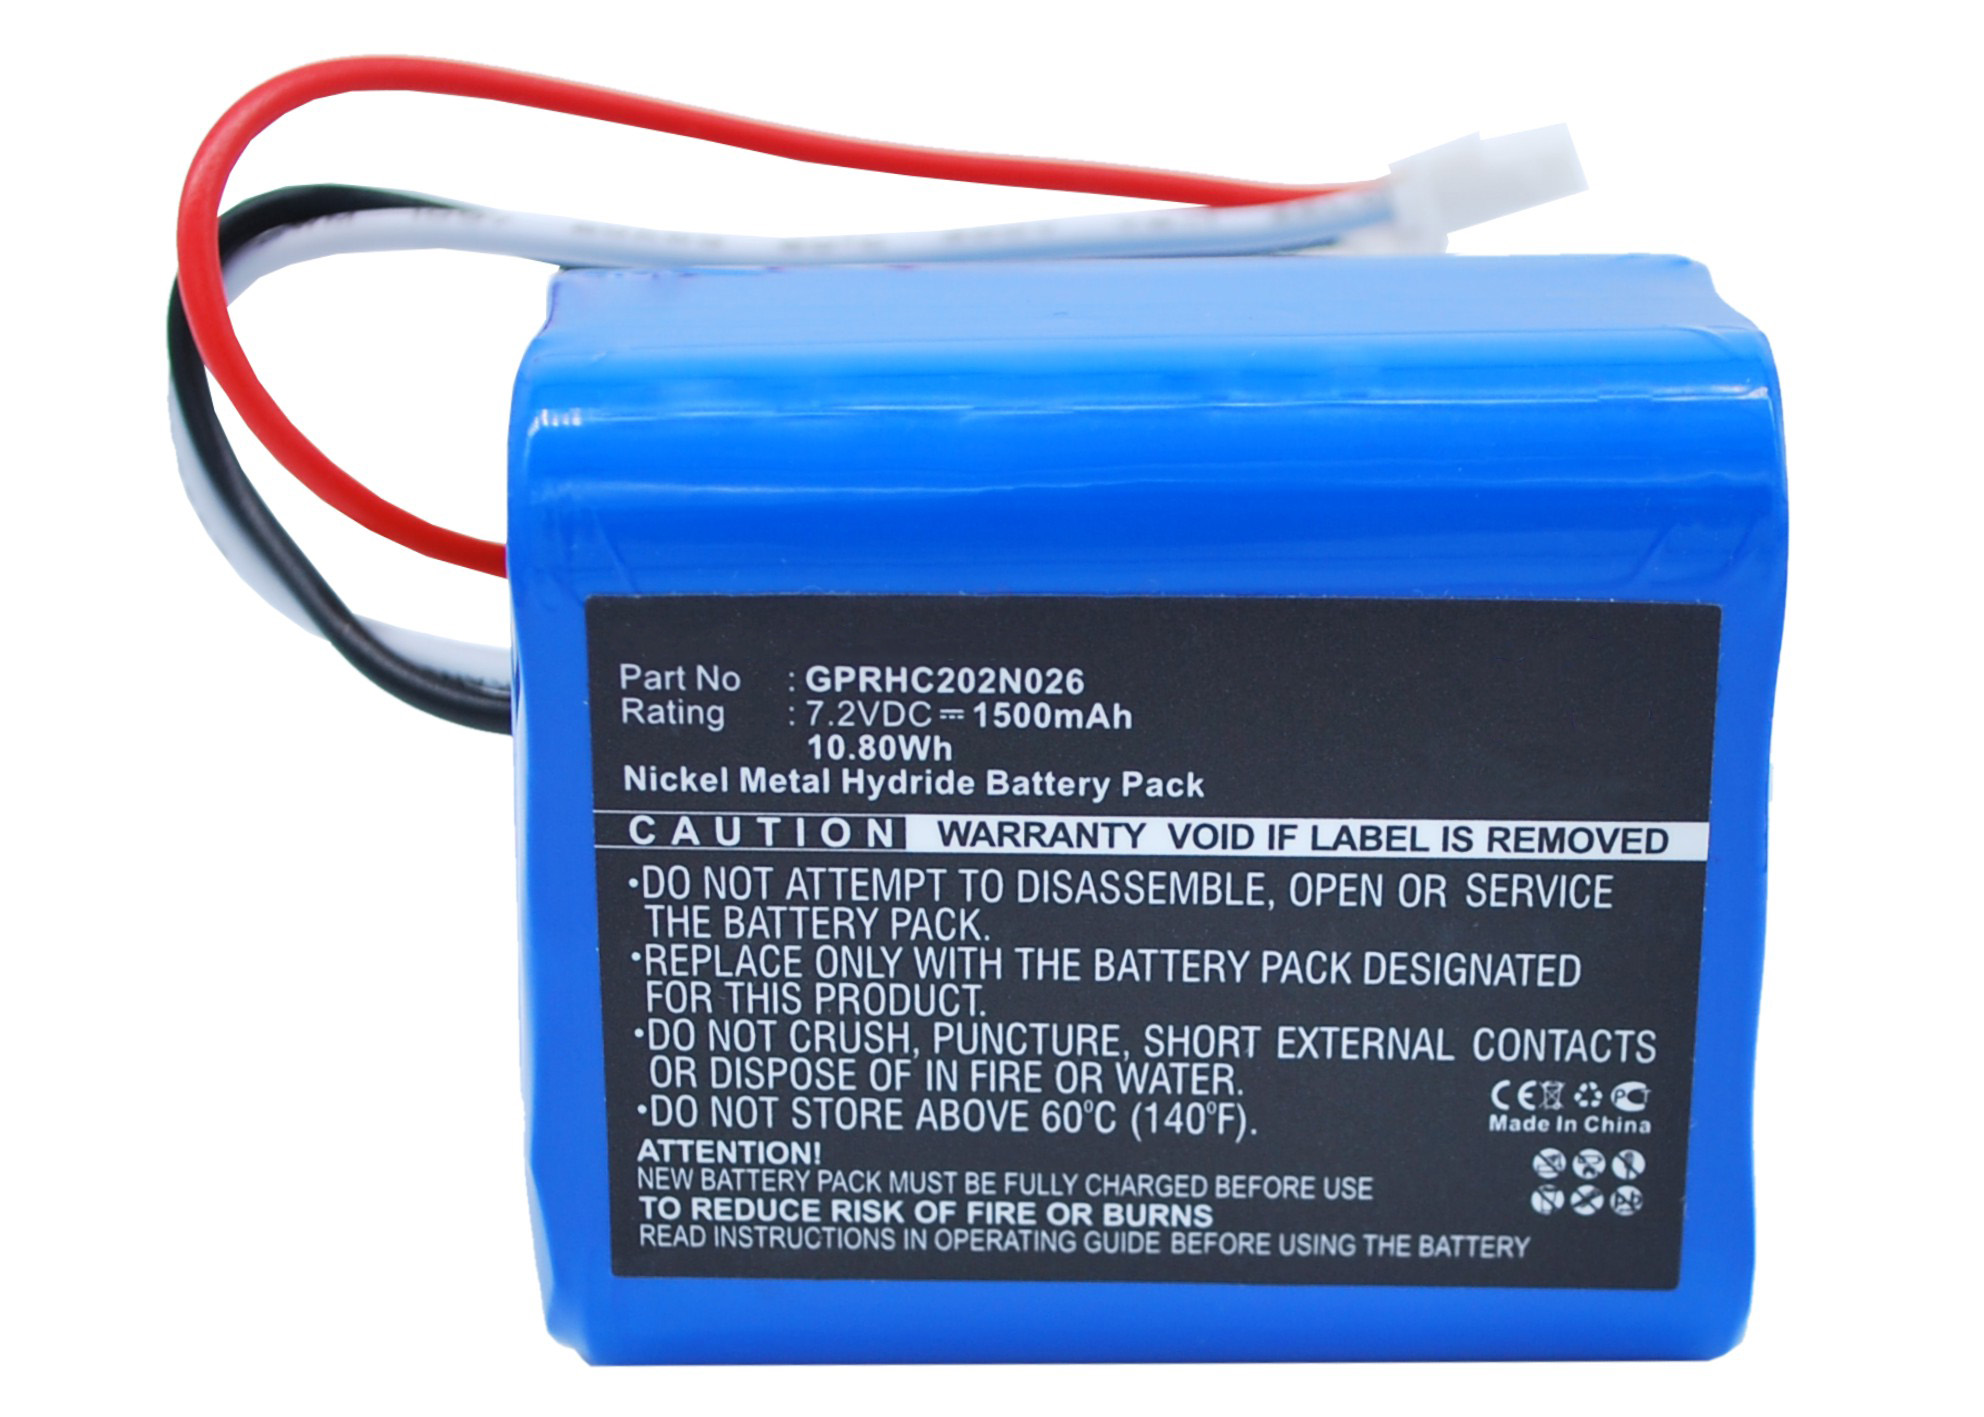 Batteries for ProscenicVacuum Cleaner